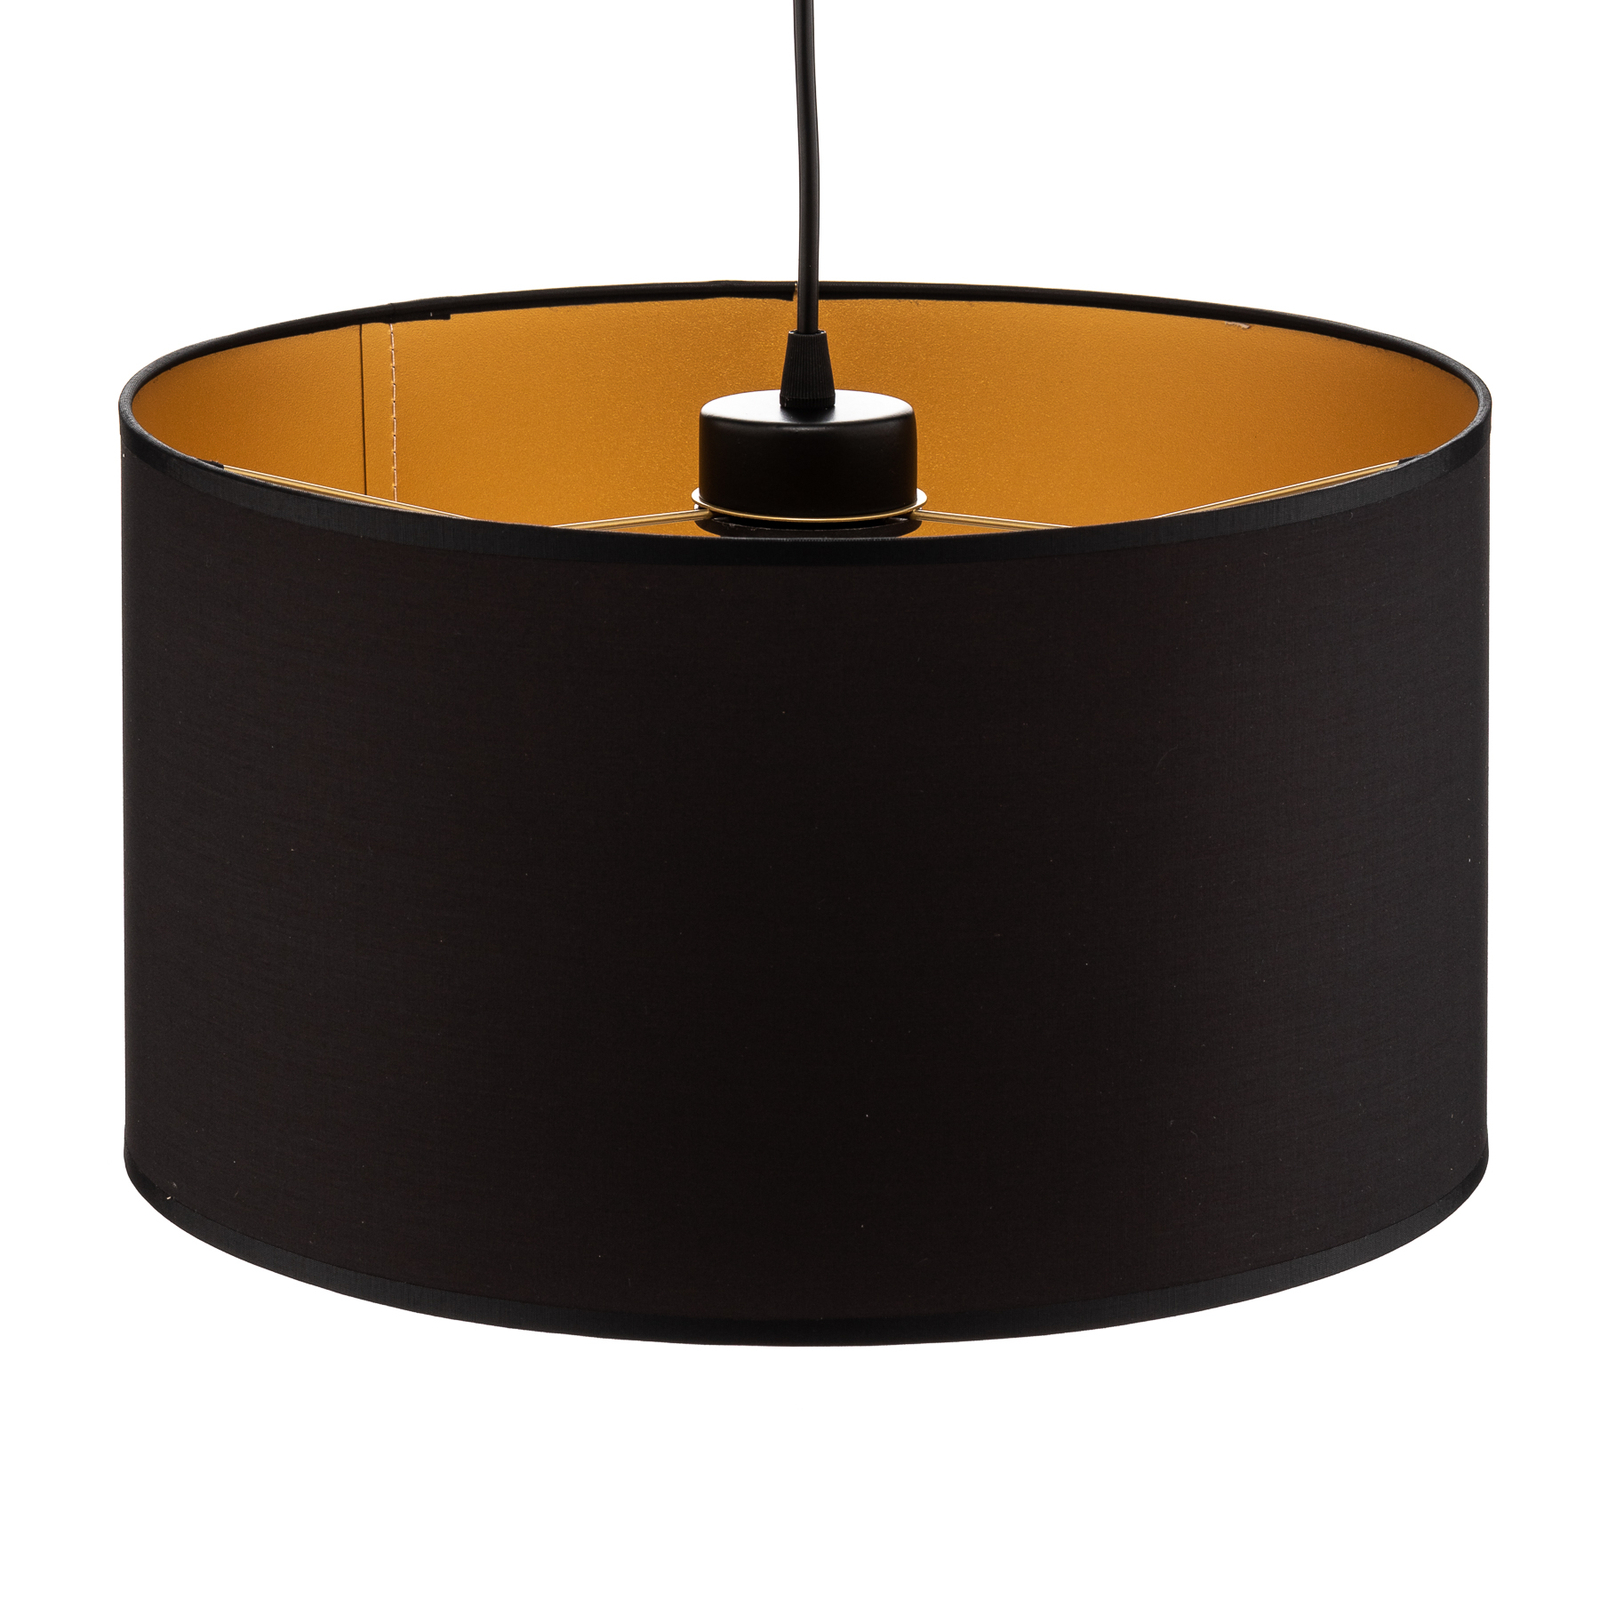 Roto 1 pendant light black, lampshade inside gold